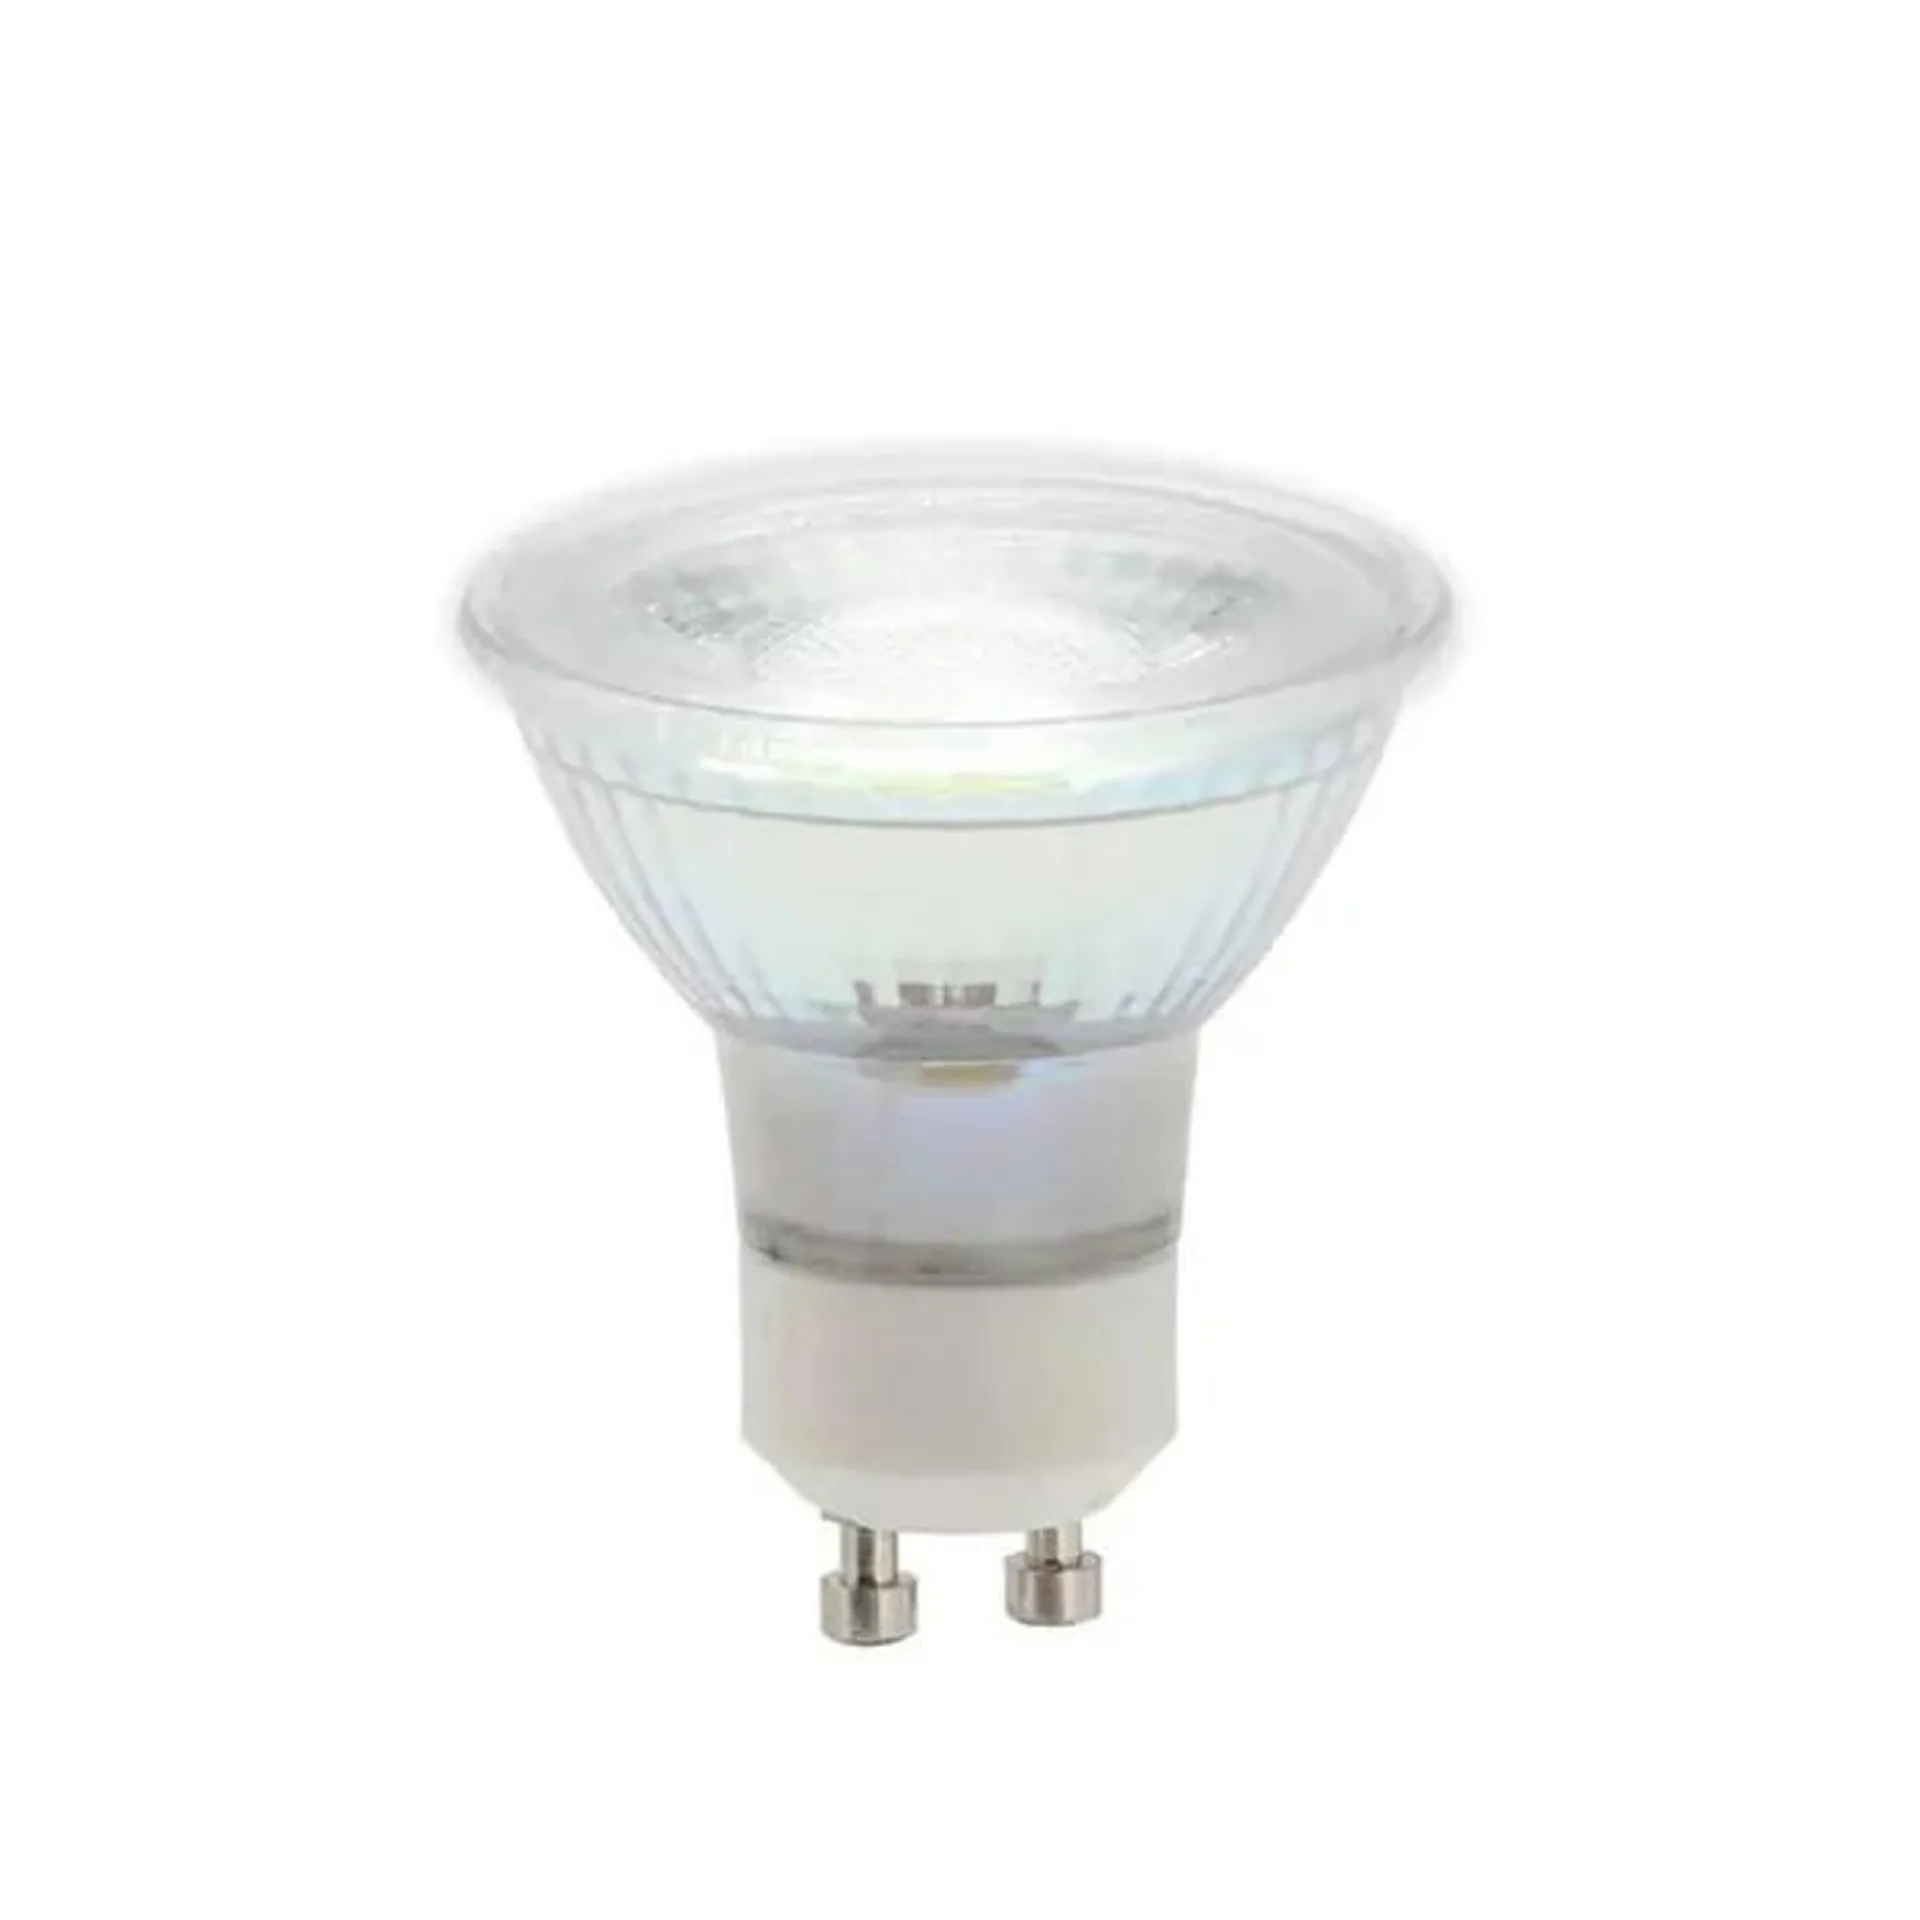 5W LED GU10 Dimmable Light Bulb, Warm White